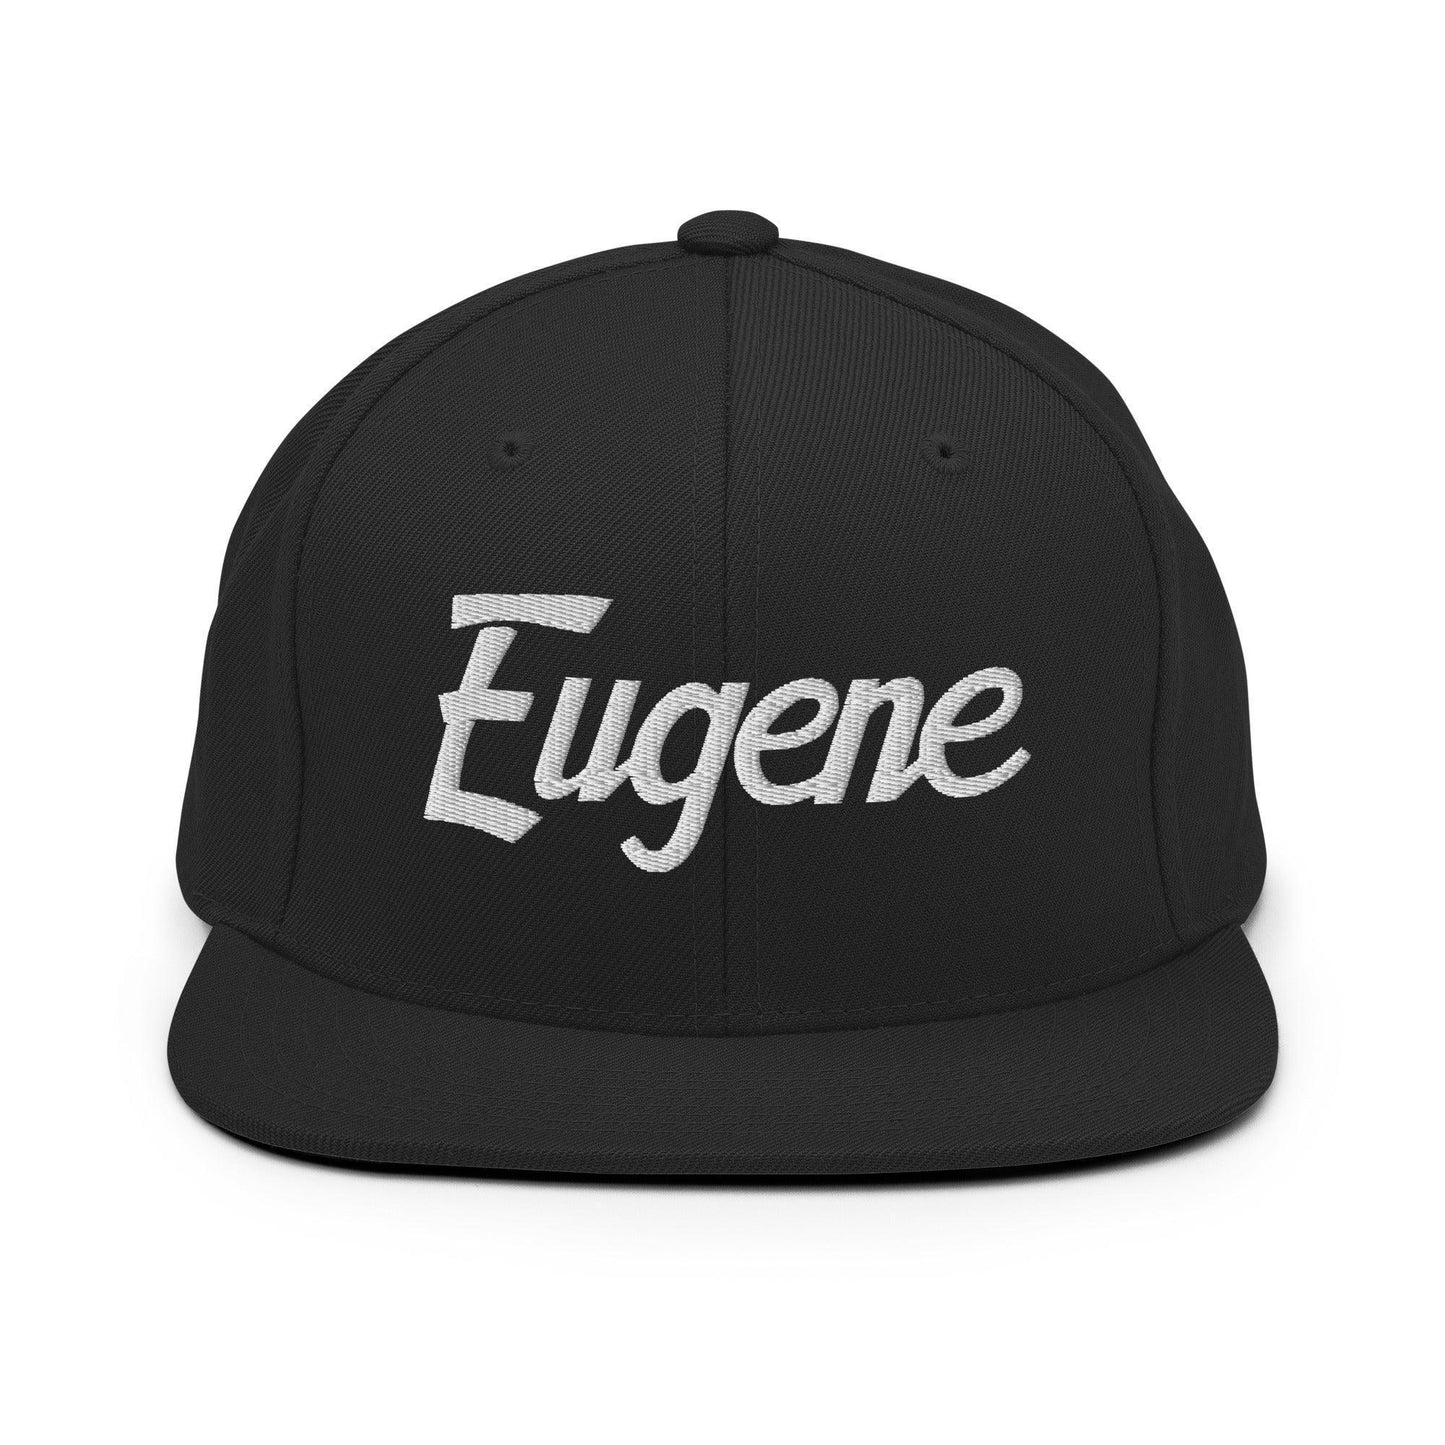 Eugene Script Snapback Hat Black